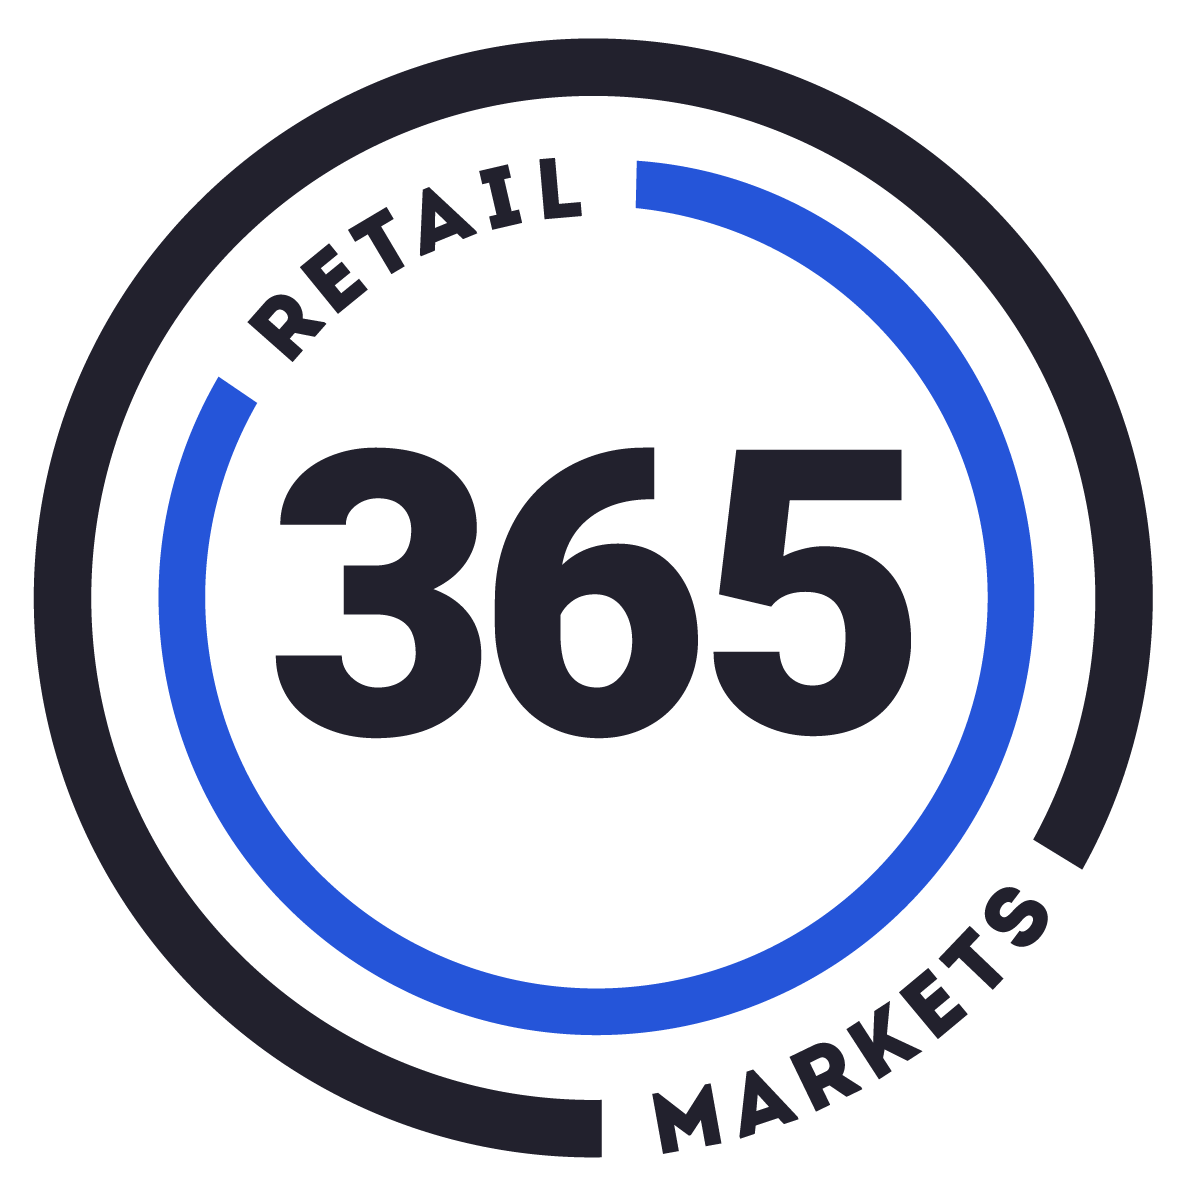 365 logo